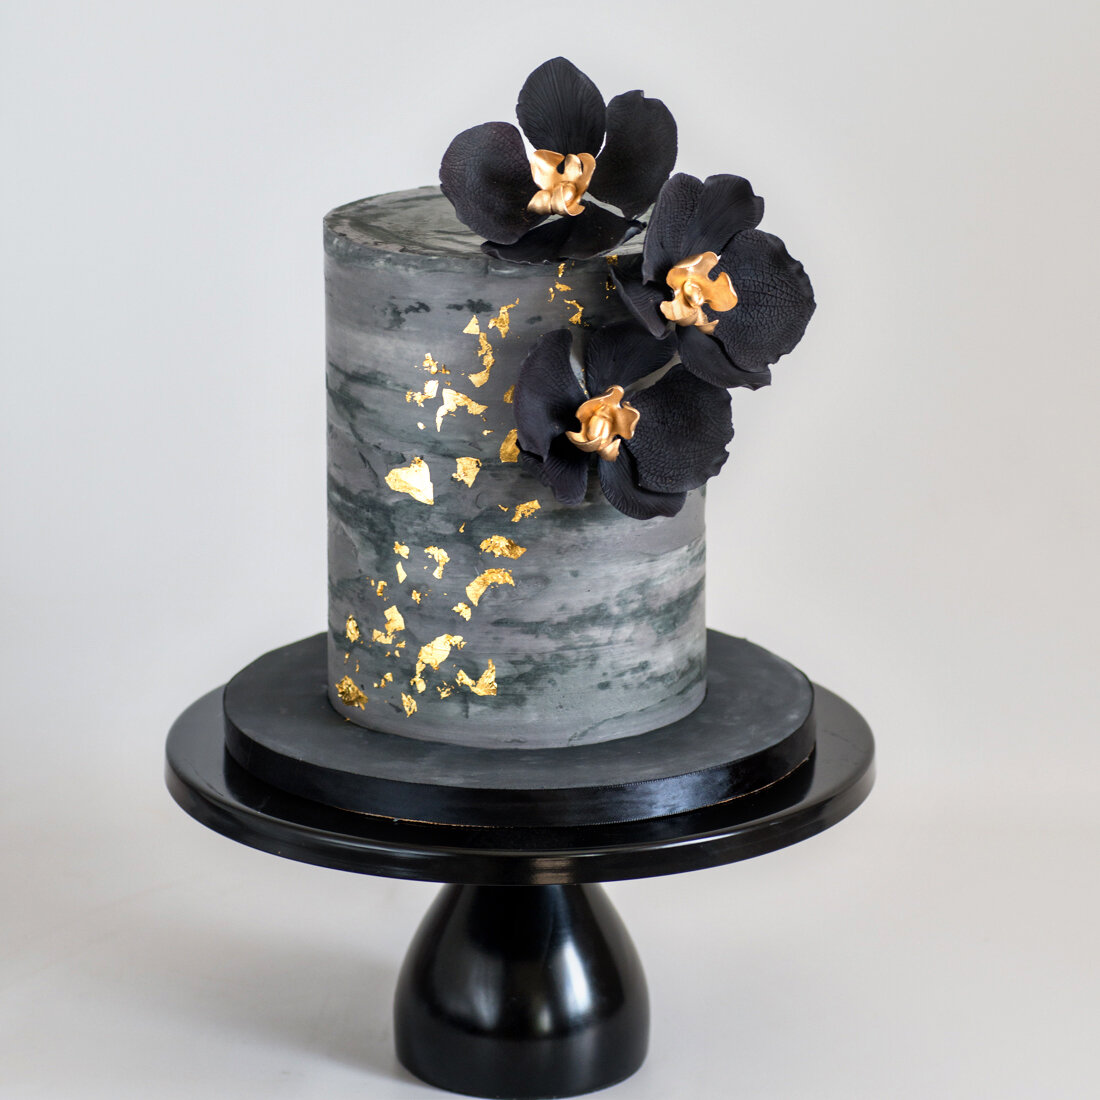 Black Orchids concrete cake